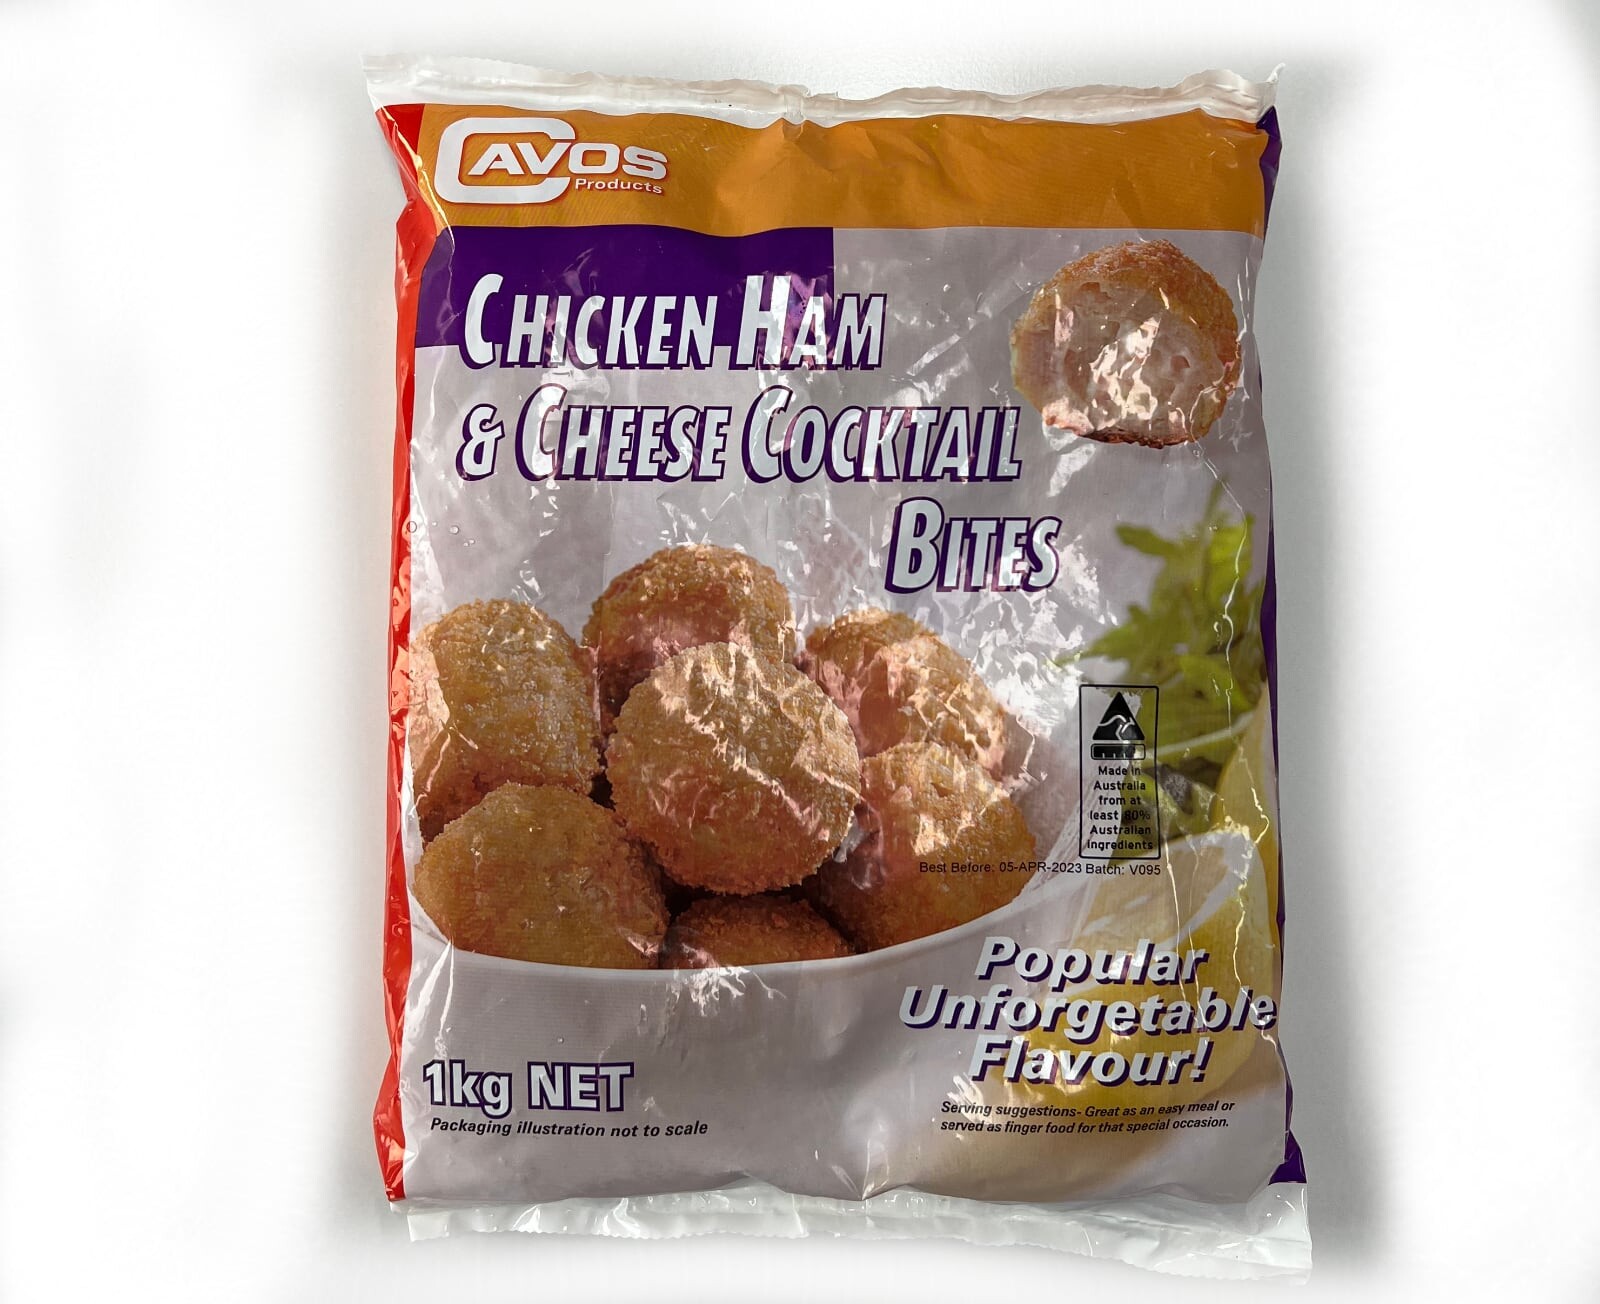 Cavos Products Chicken Cocktail Bites - Ham & Cheese